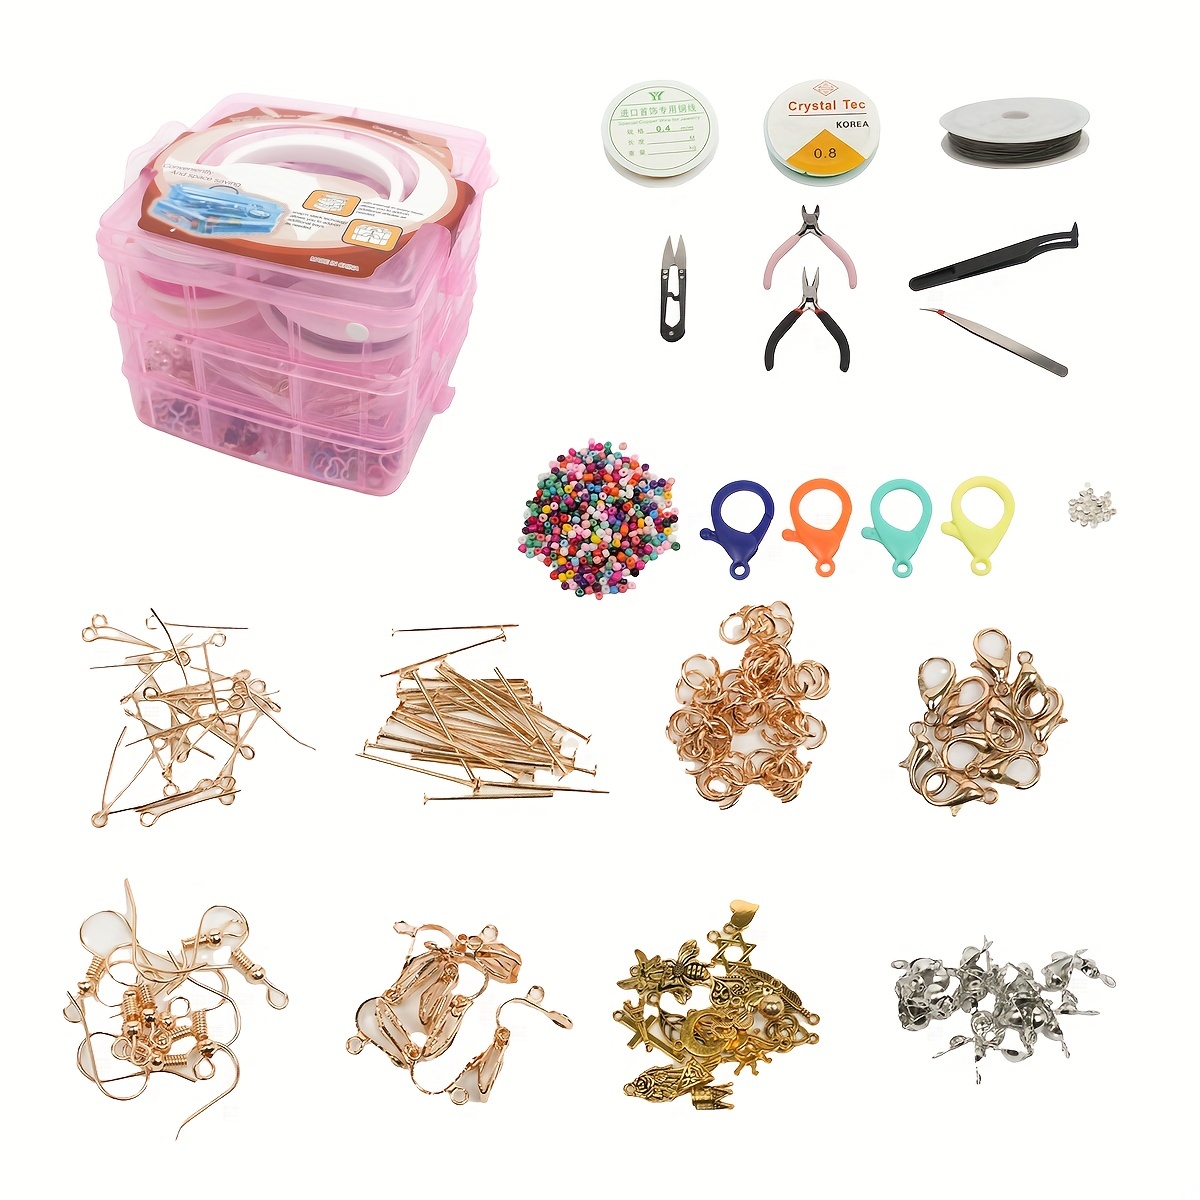 Kit de Piezas de Suministros para Hacer Aretes, Jewellery Making